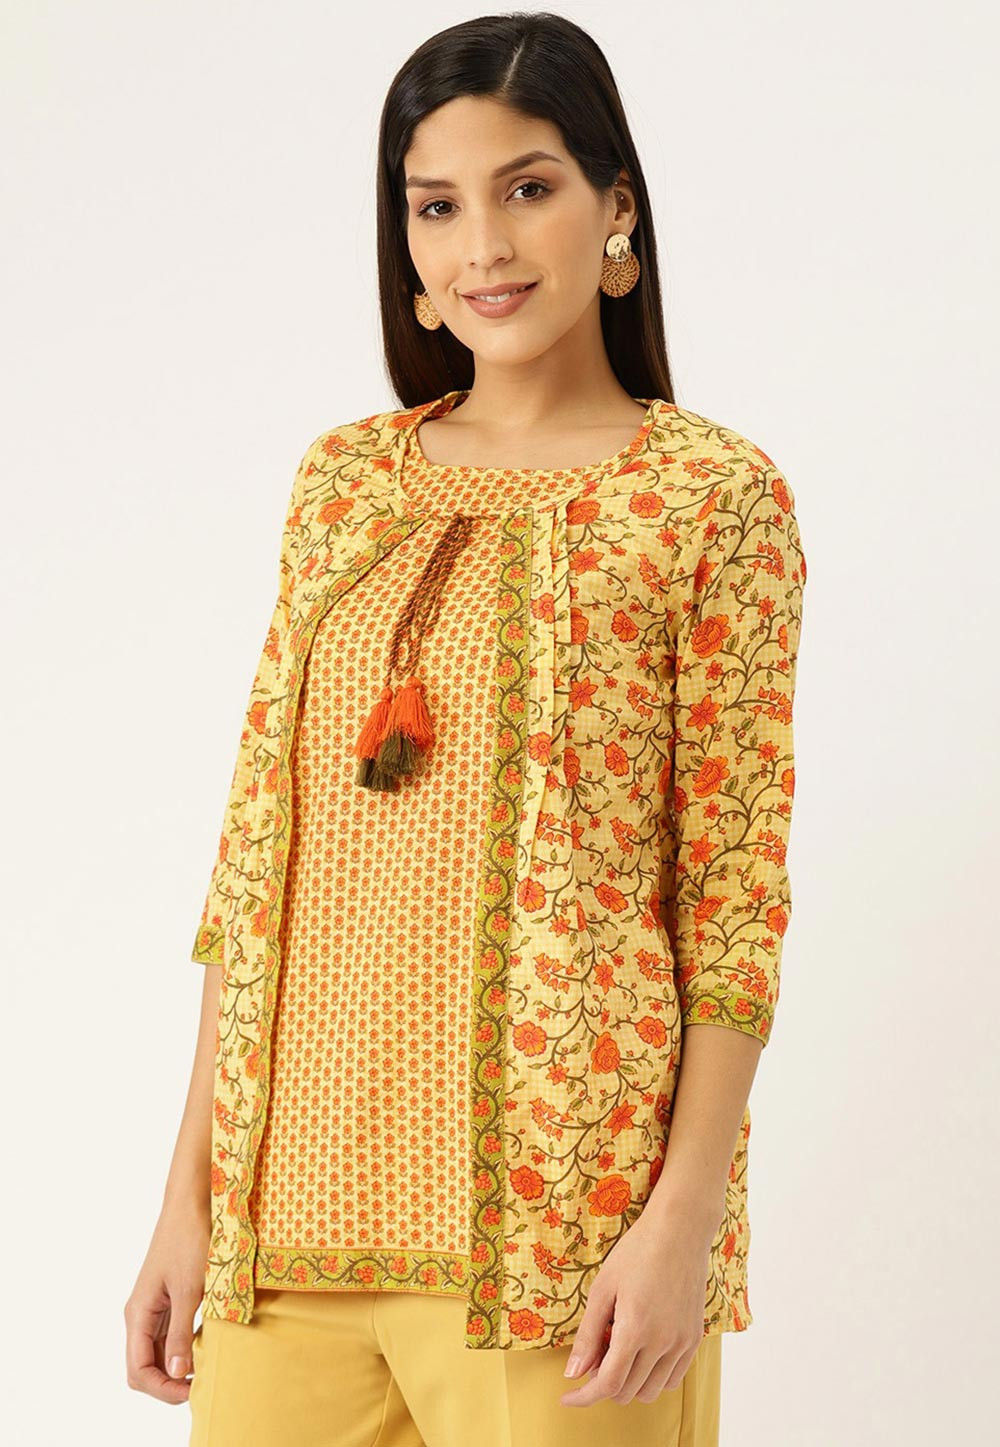 Buy Printed Cotton Tunic in Light Yellow Online : TUH72 - Utsav Fashion